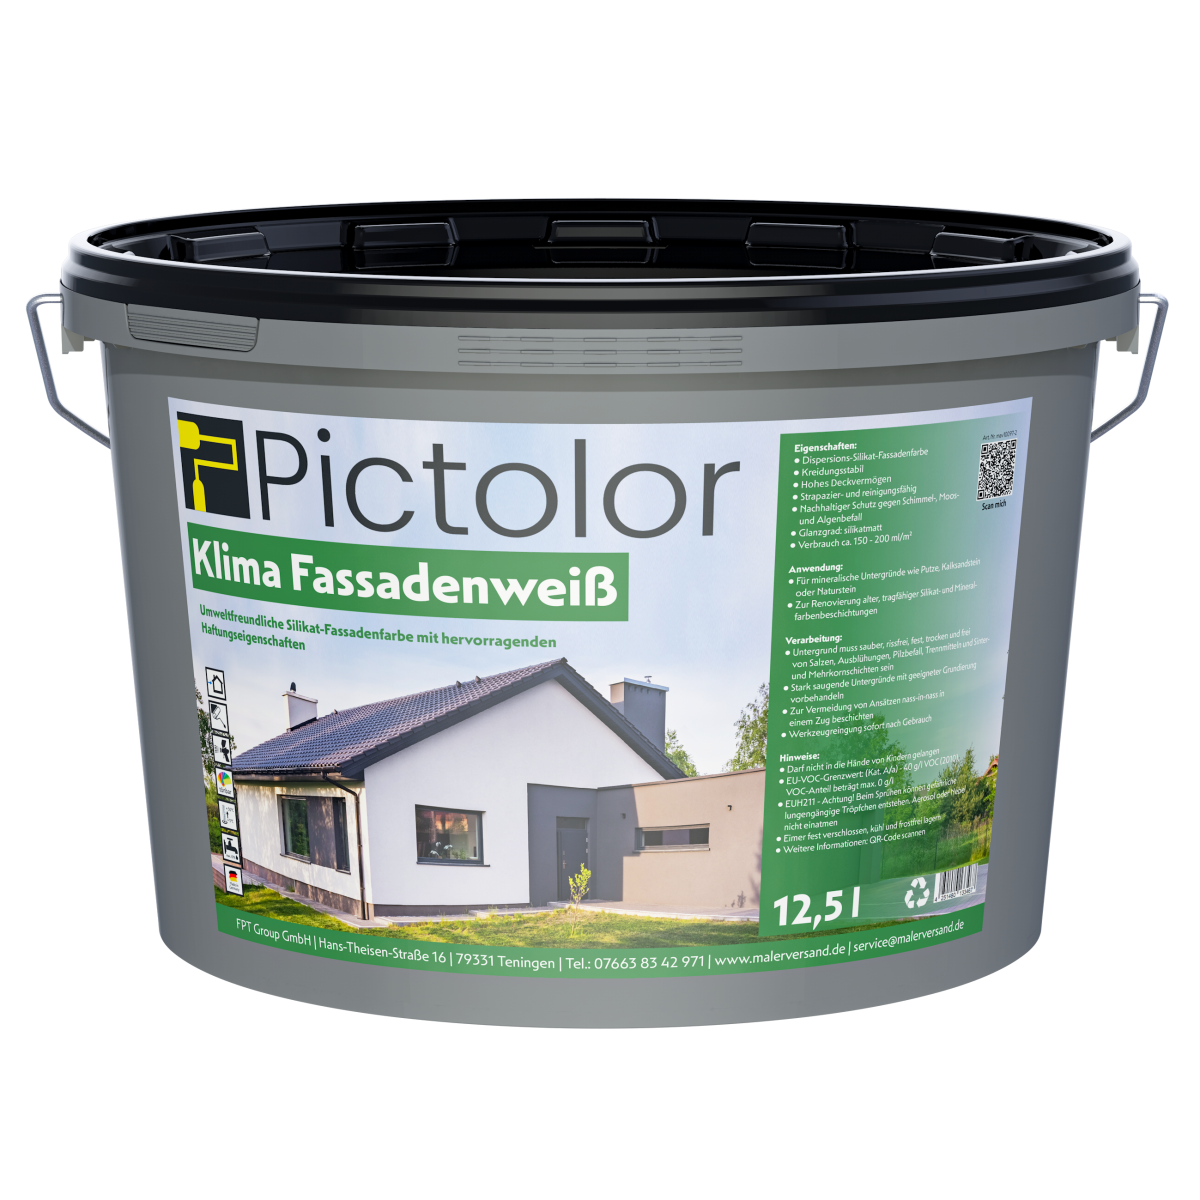 Pictolor® Klima-Fassadenweiß Silikat-Fassadenfarbe von Pictolor